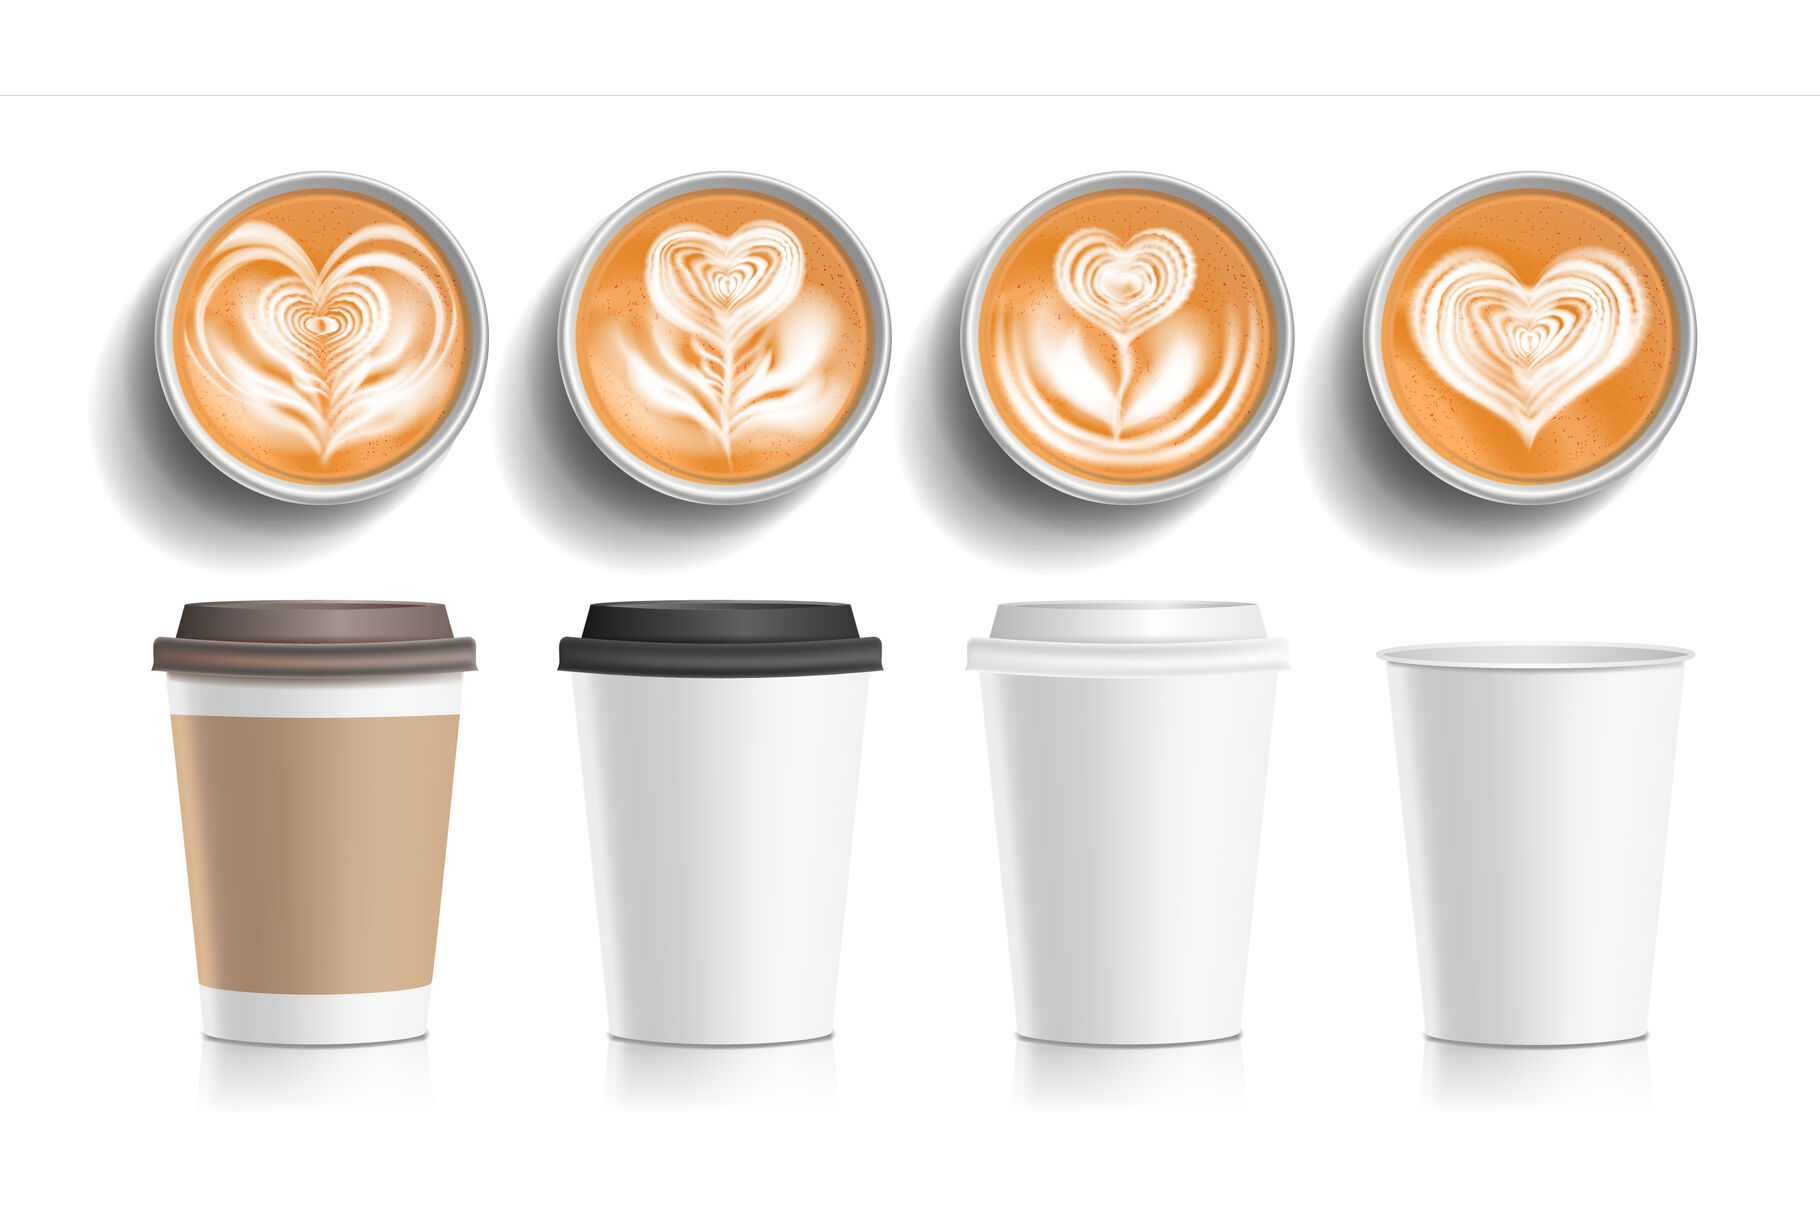 https://media1.thehungryjpeg.com/thumbs2/ori_3747613_za0phsbclys0gcpml5481ia0ps2u6aifsu3ktbre_coffee-cups-art-top-view-vector-plastic-paper-white-empty-fast-food-take-out-coffee-menu-mugs-various-ocher-paper-cups-breakfast-beverage-realistic-isolated-illustration.jpg